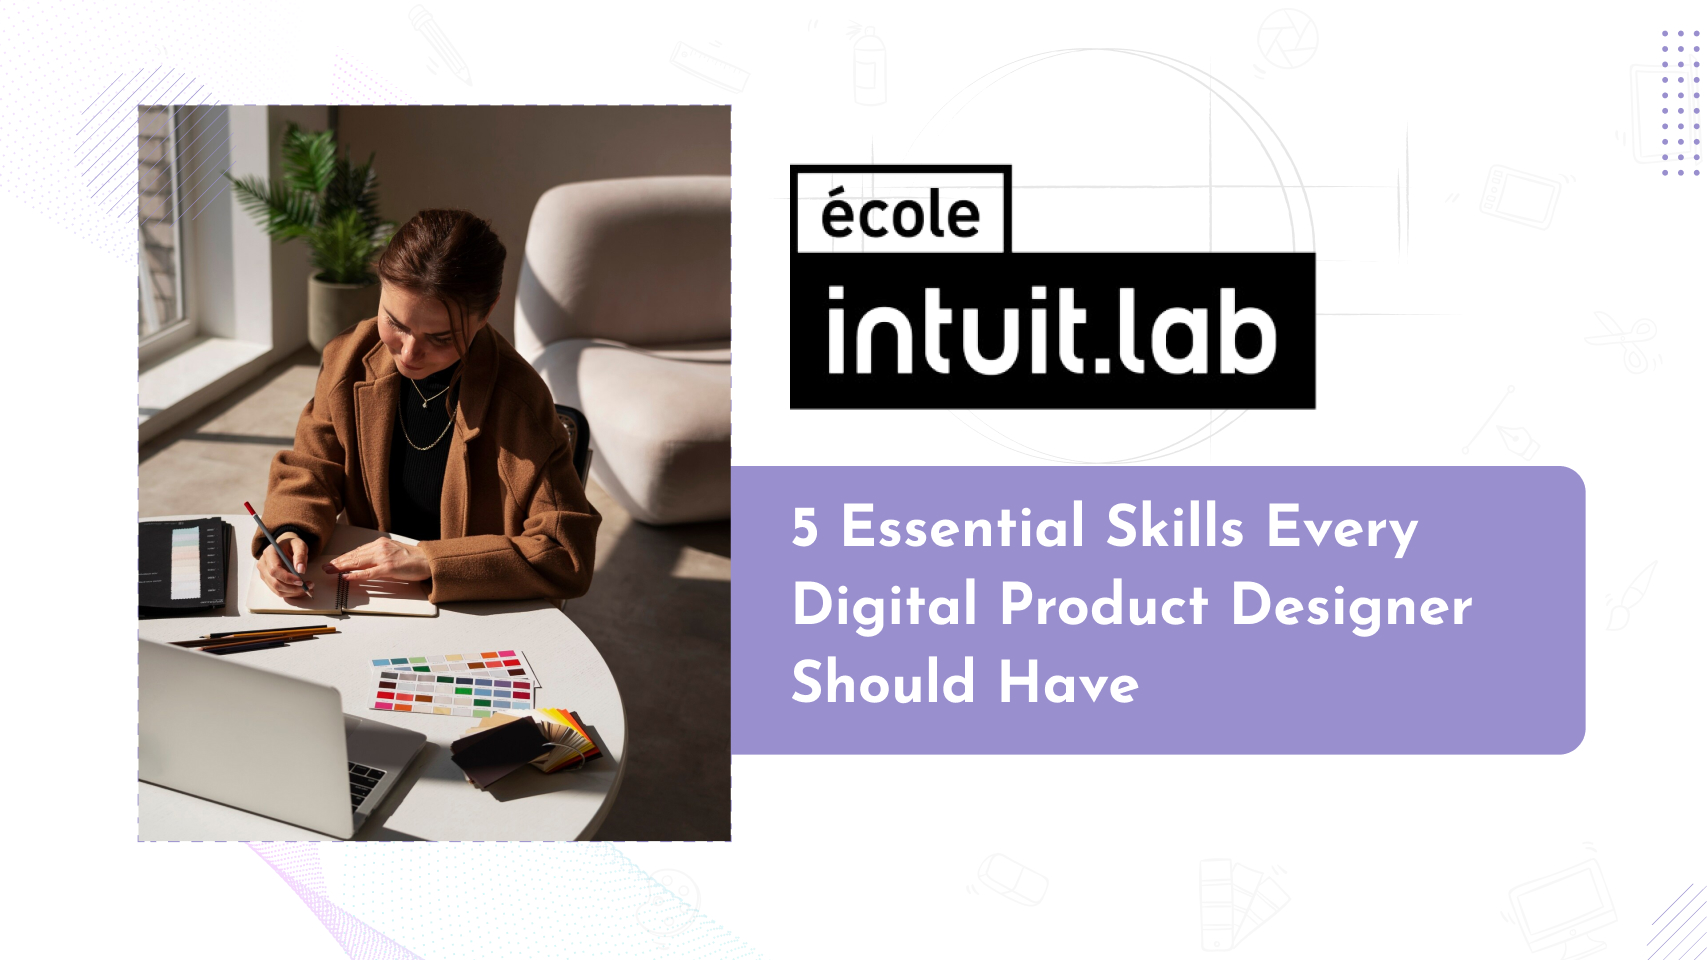 Essential Skills Every Digital Product Designer Should Have